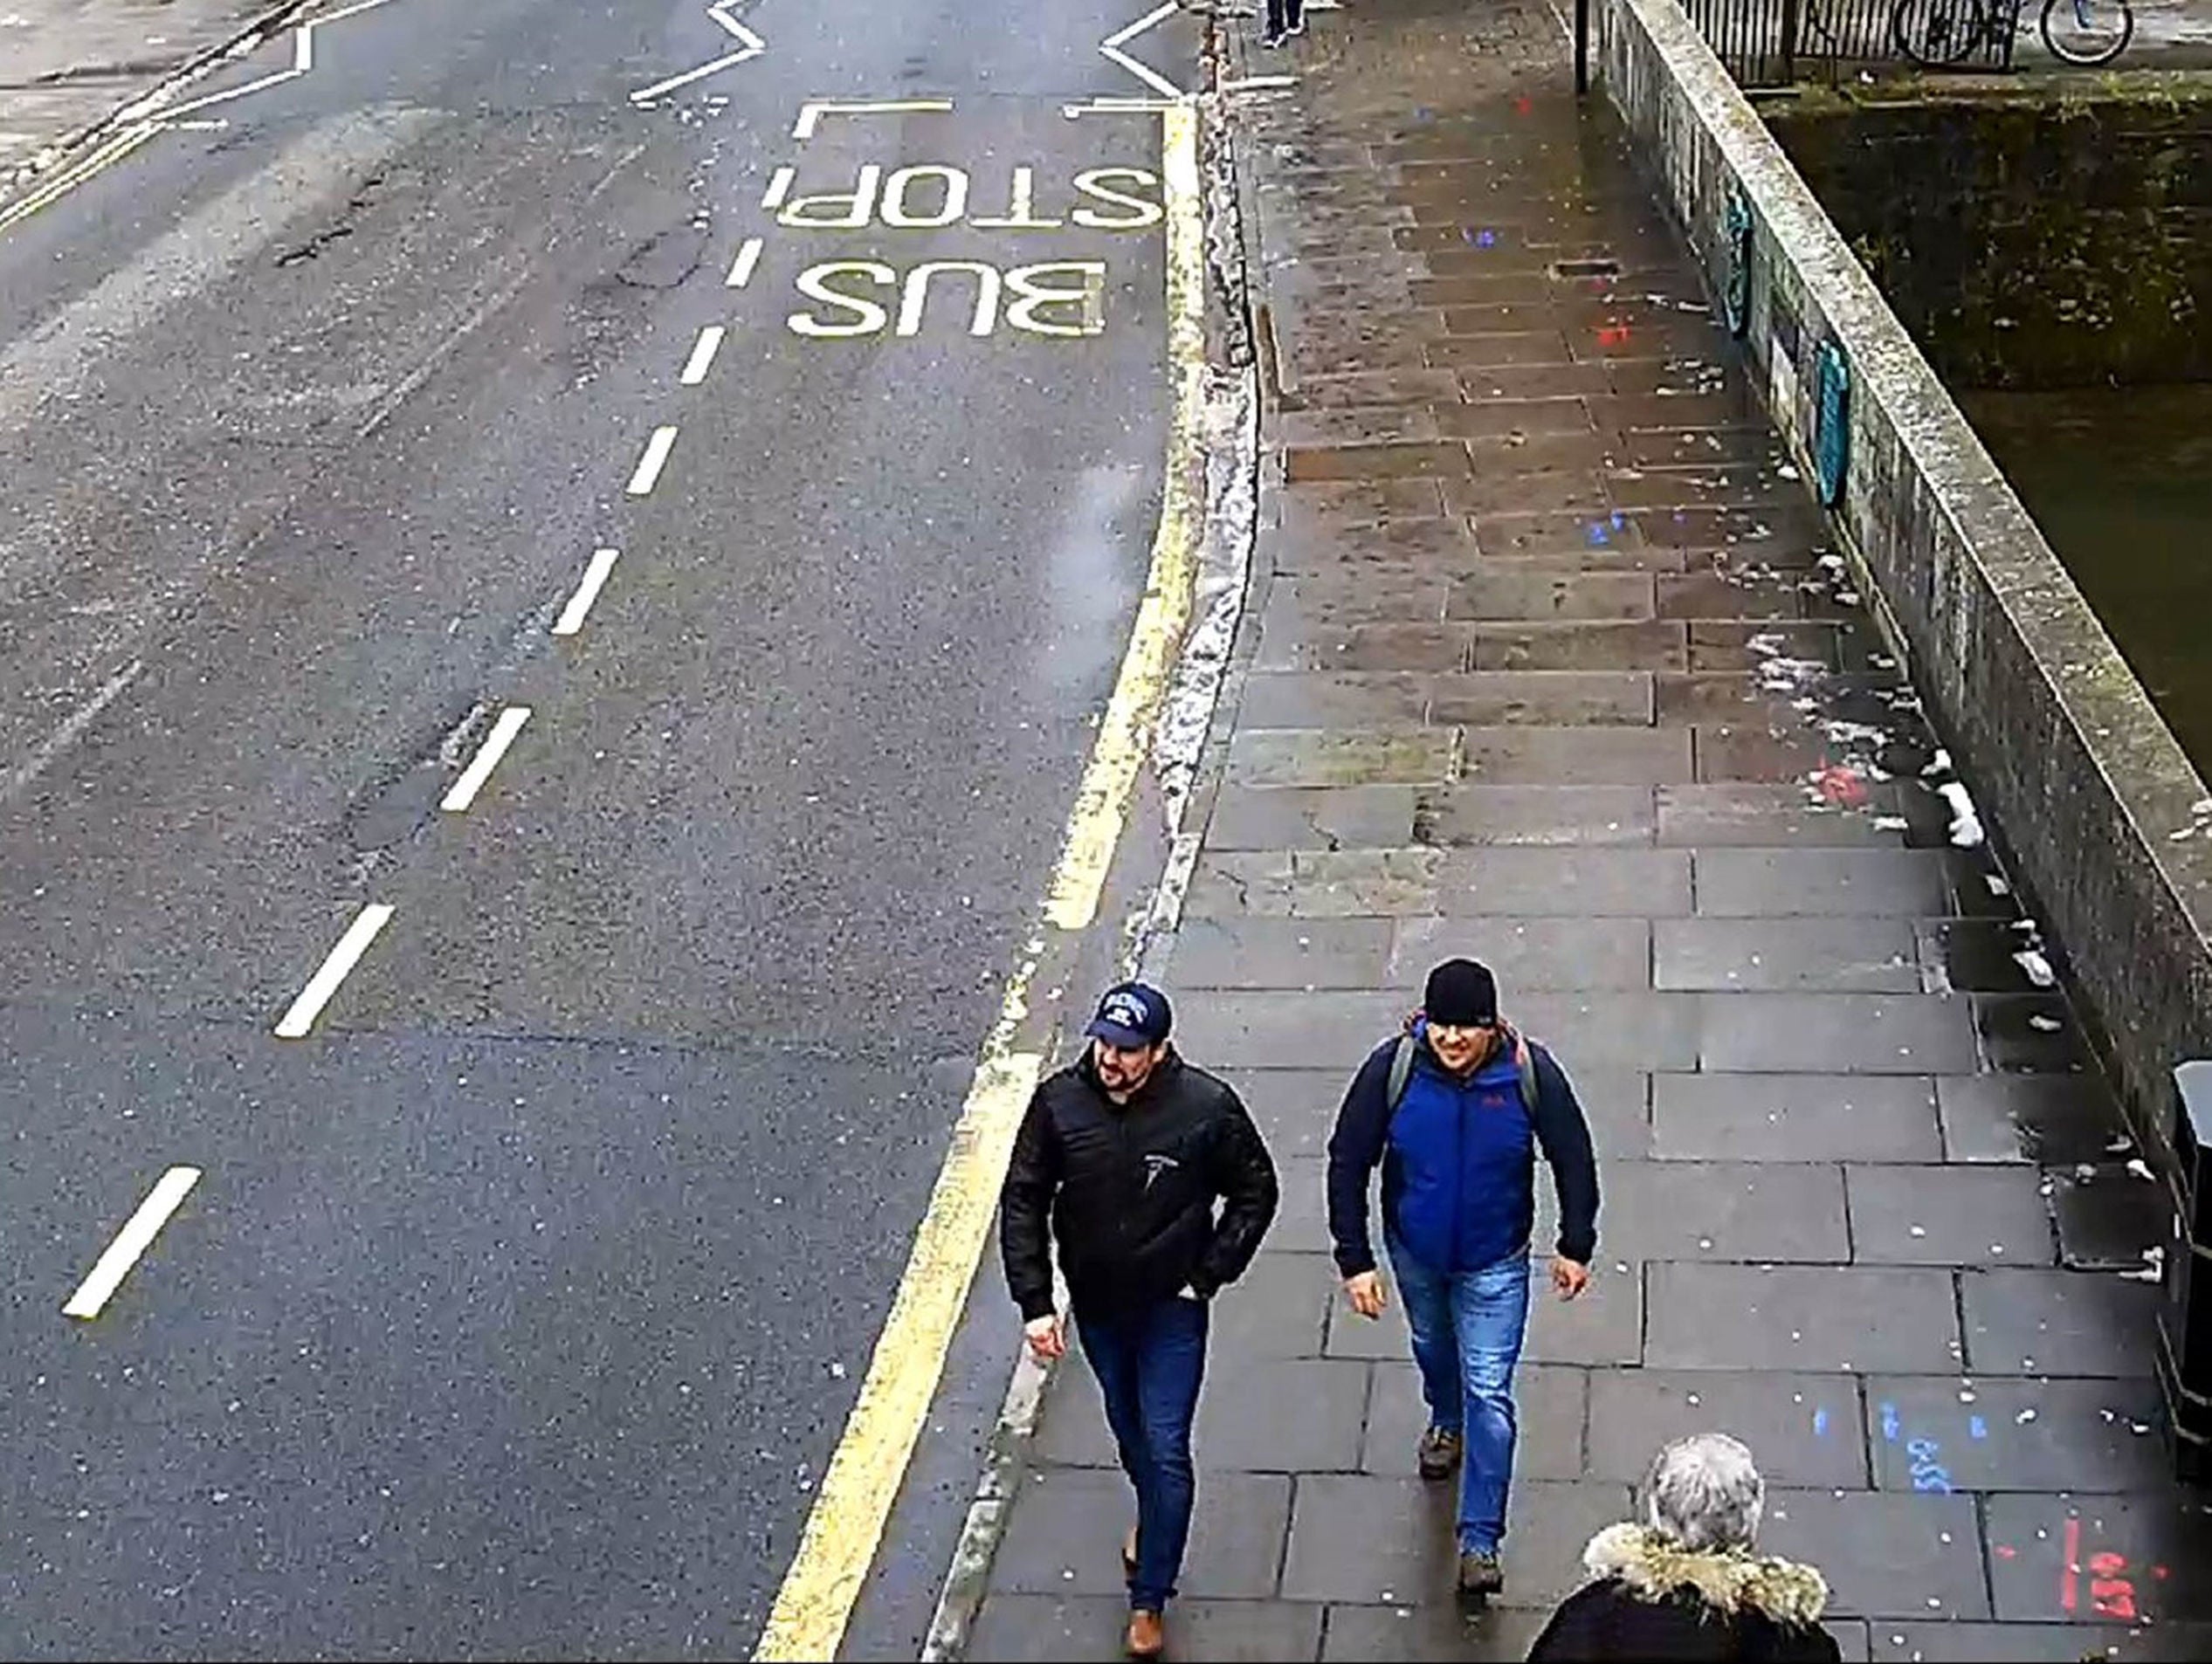 Russian Nationals Ruslan Boshirov and Alexander Petrov on Fisherton Road, Salisbury in March 2018 (Metropolitan Police/PA)